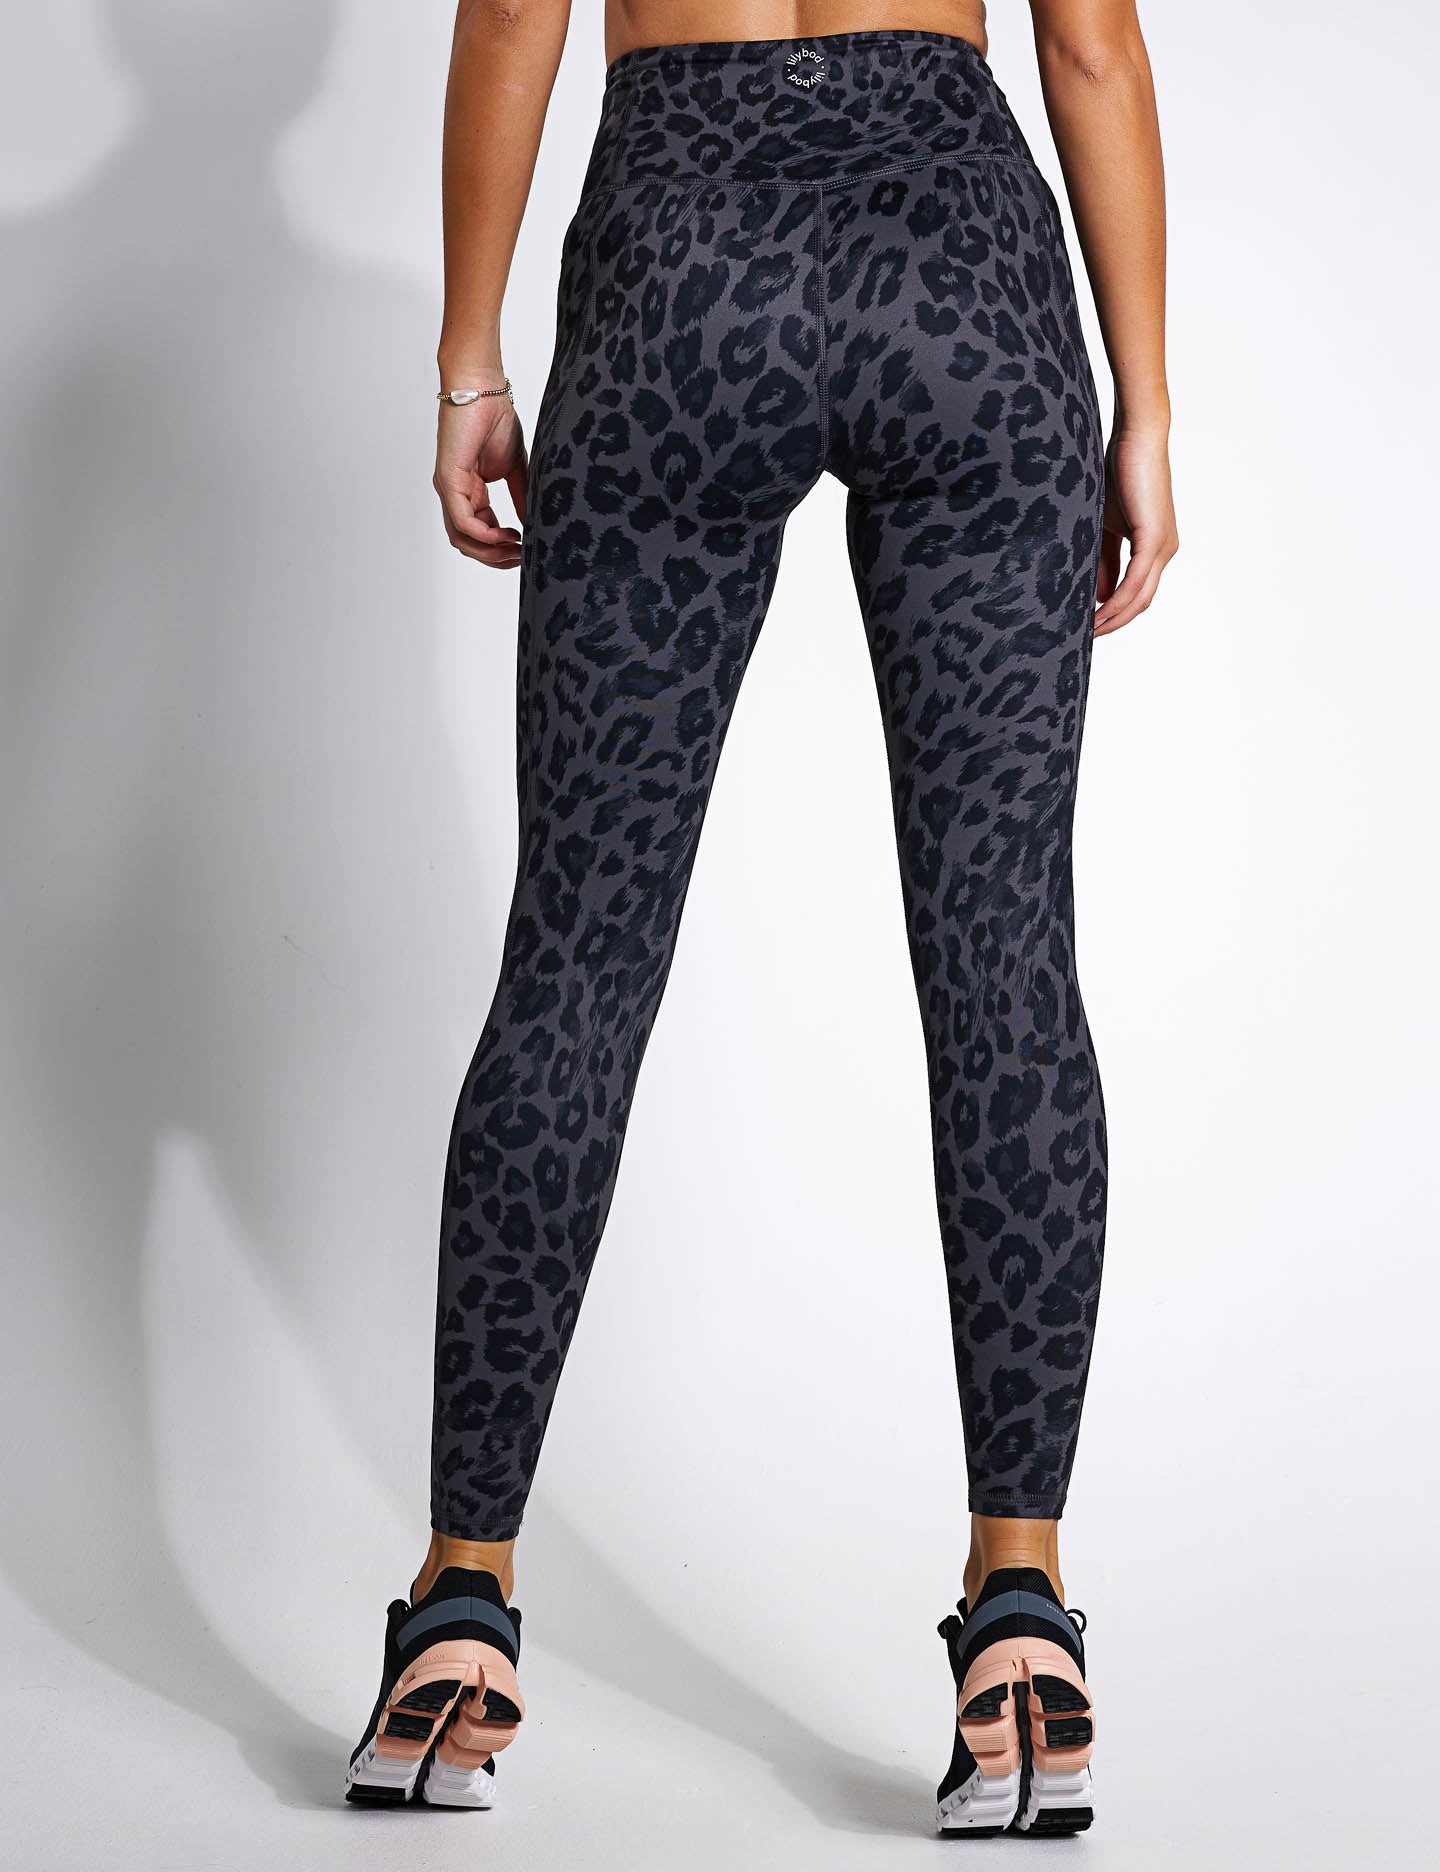 UGG Saylor Legging Leopard Print LARGE 1126474  Leggings are not pants,  Leopard print leggings, Animal print leggings